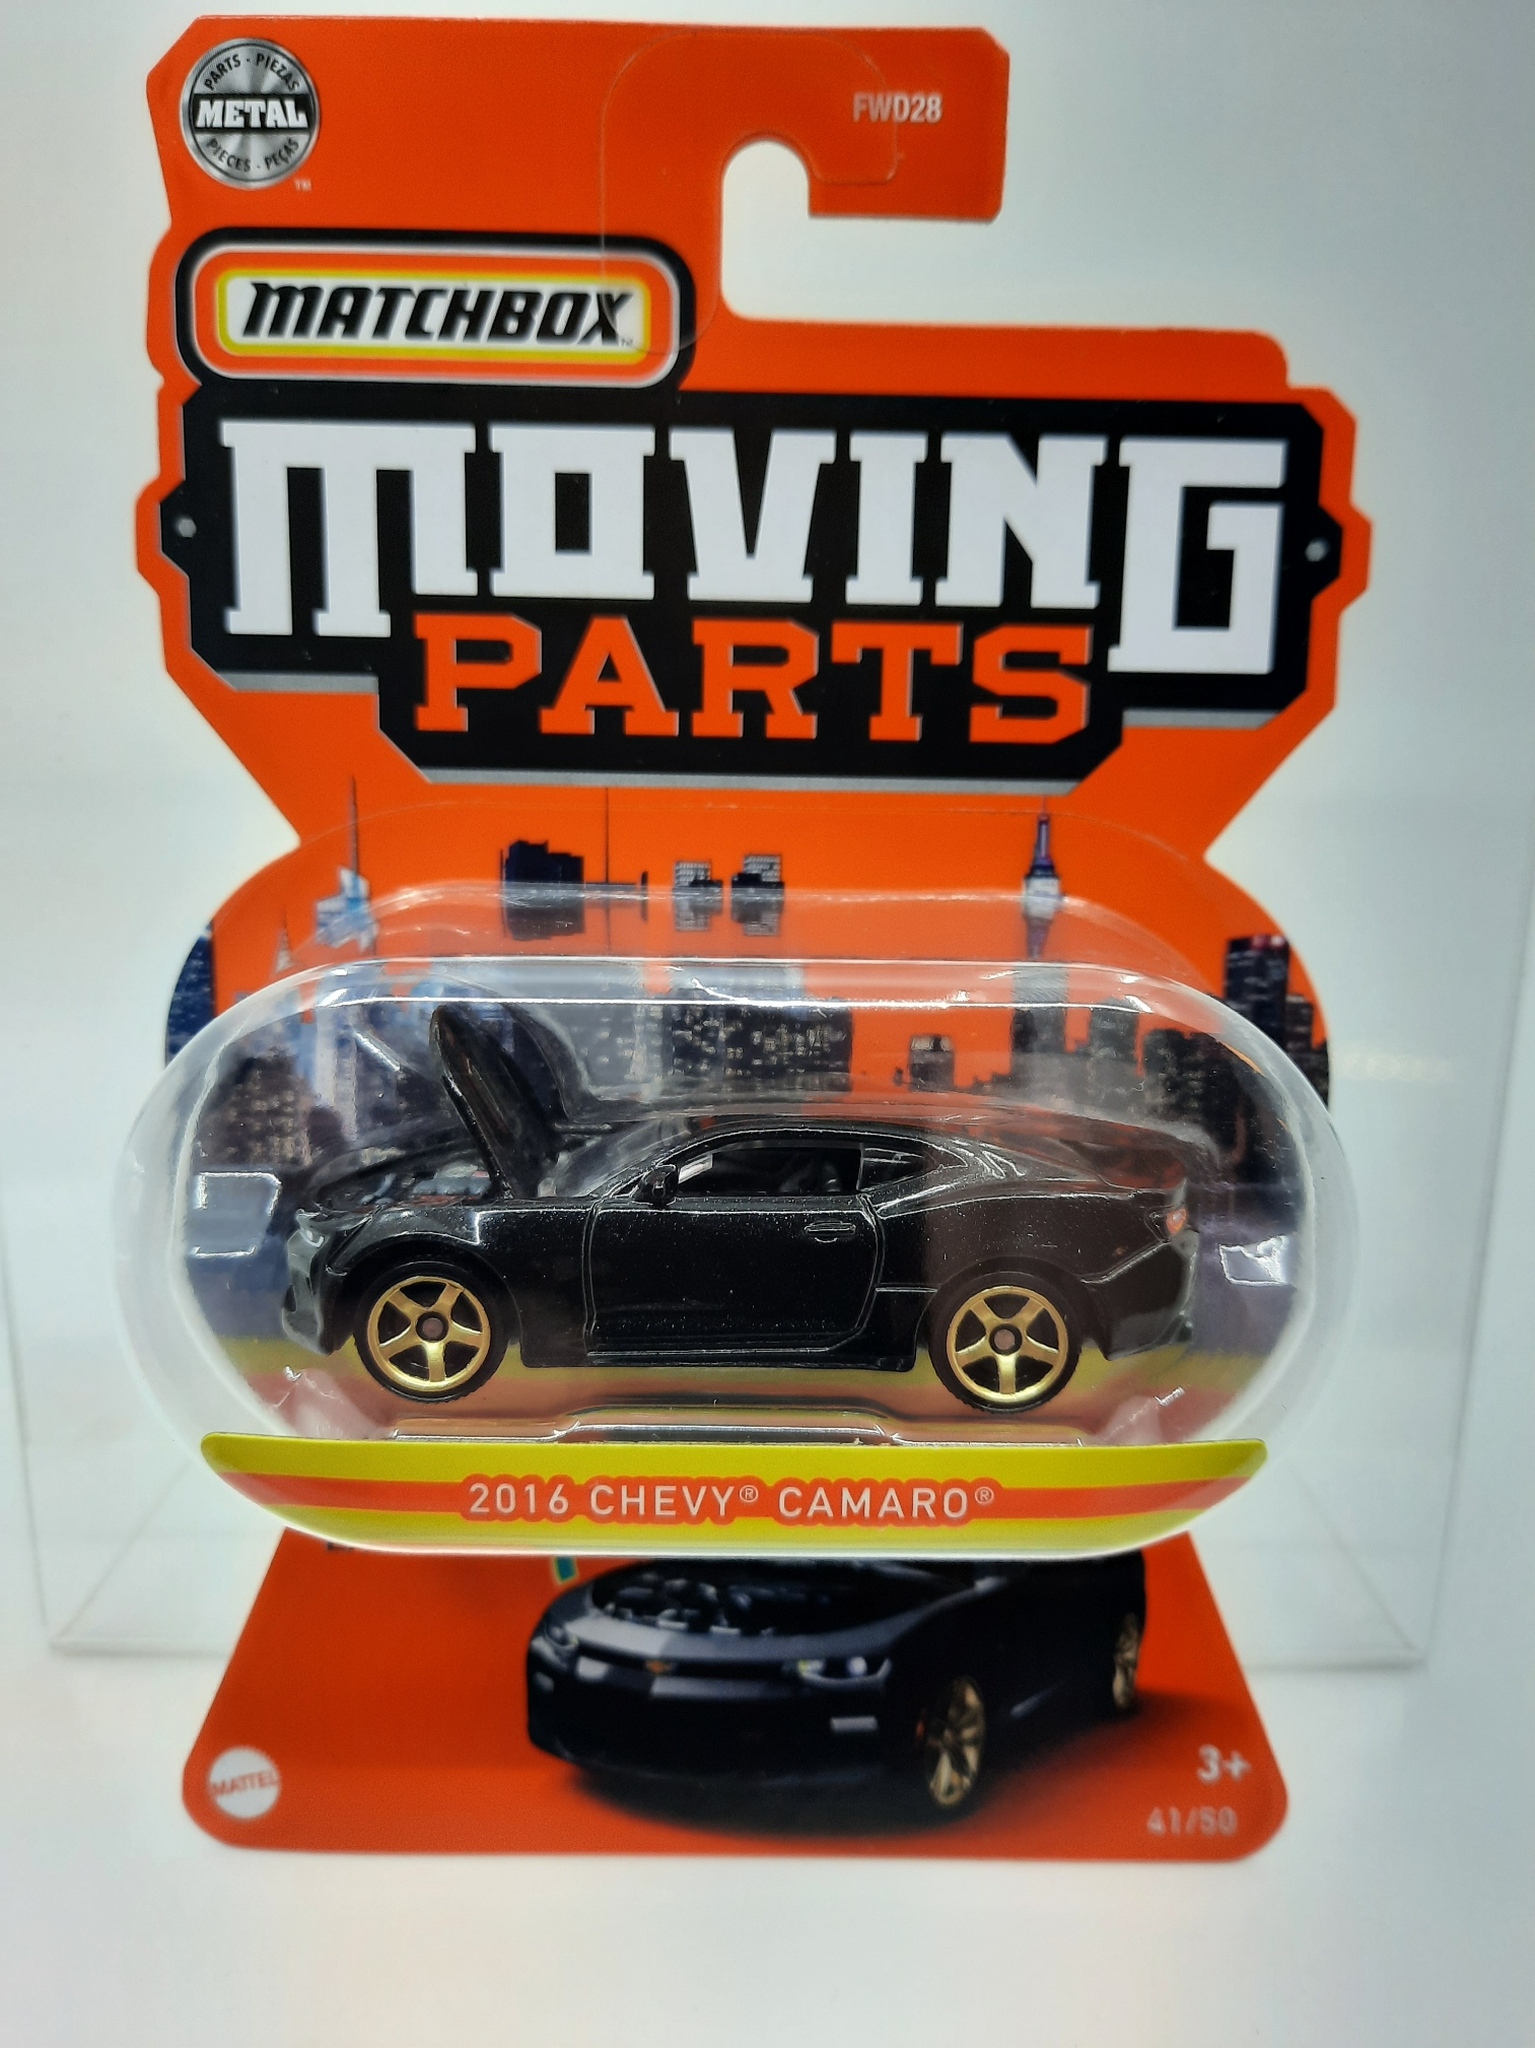 Moving parts - Chevy Camaro 2016